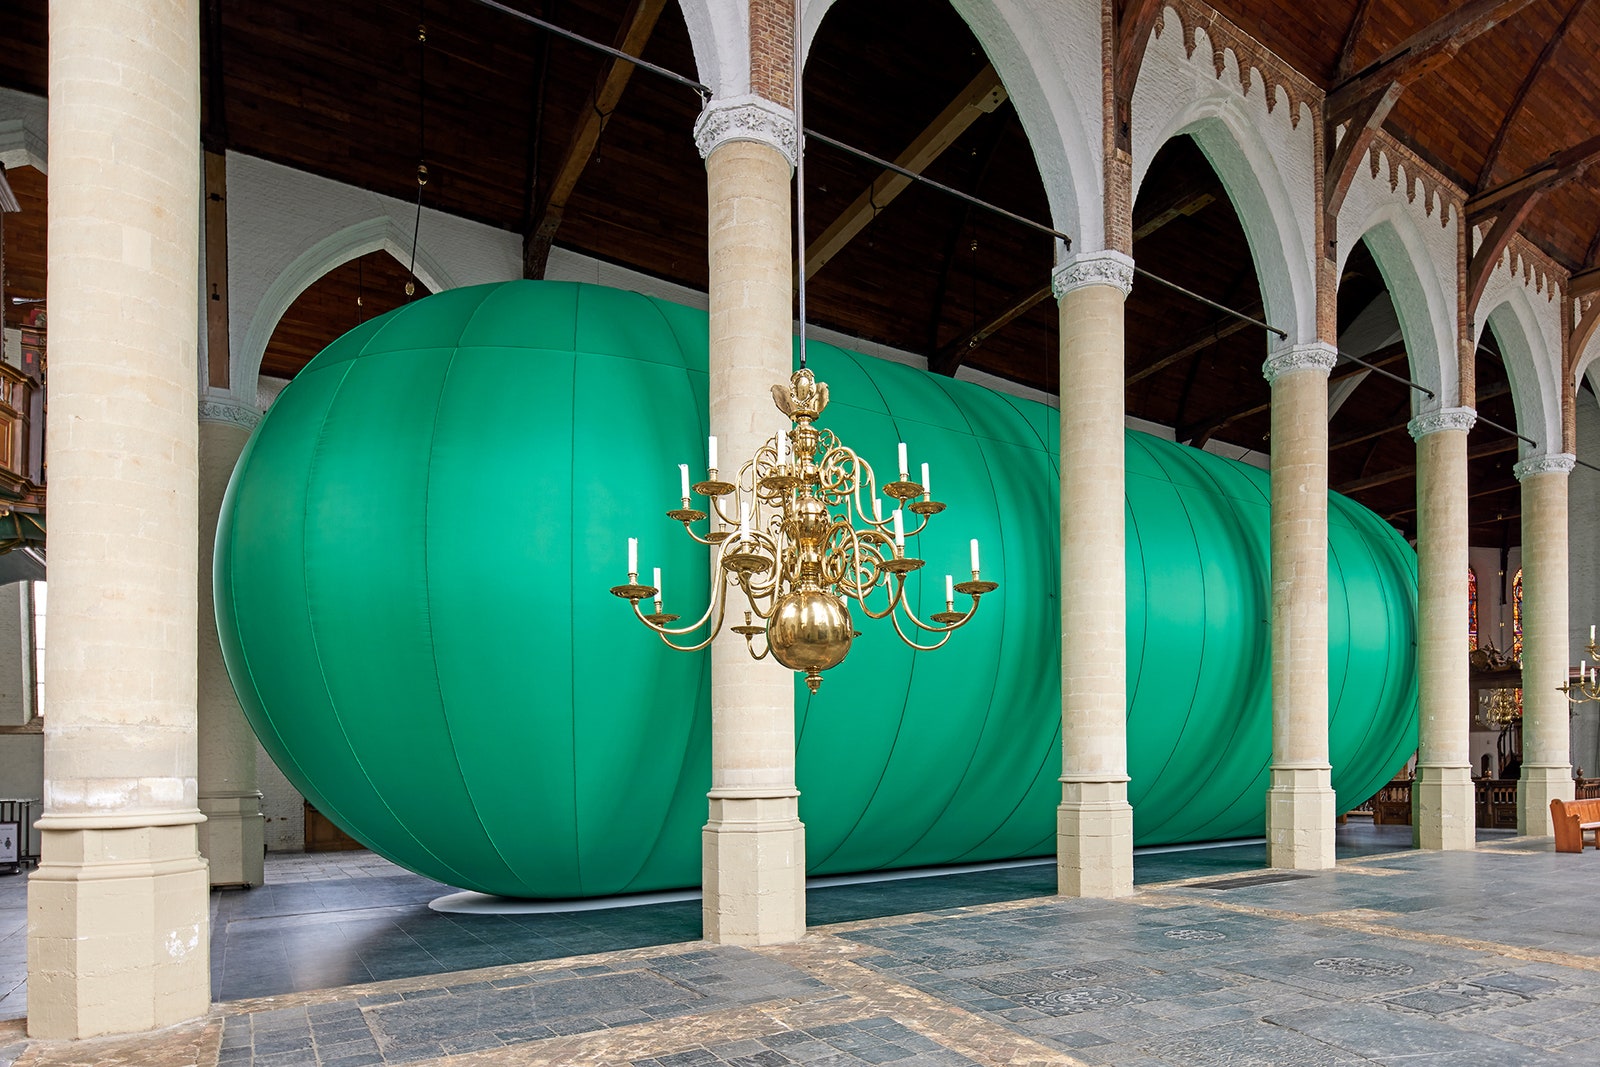 “Городской кокон” надувная инсталляция Флорентина Хофмана